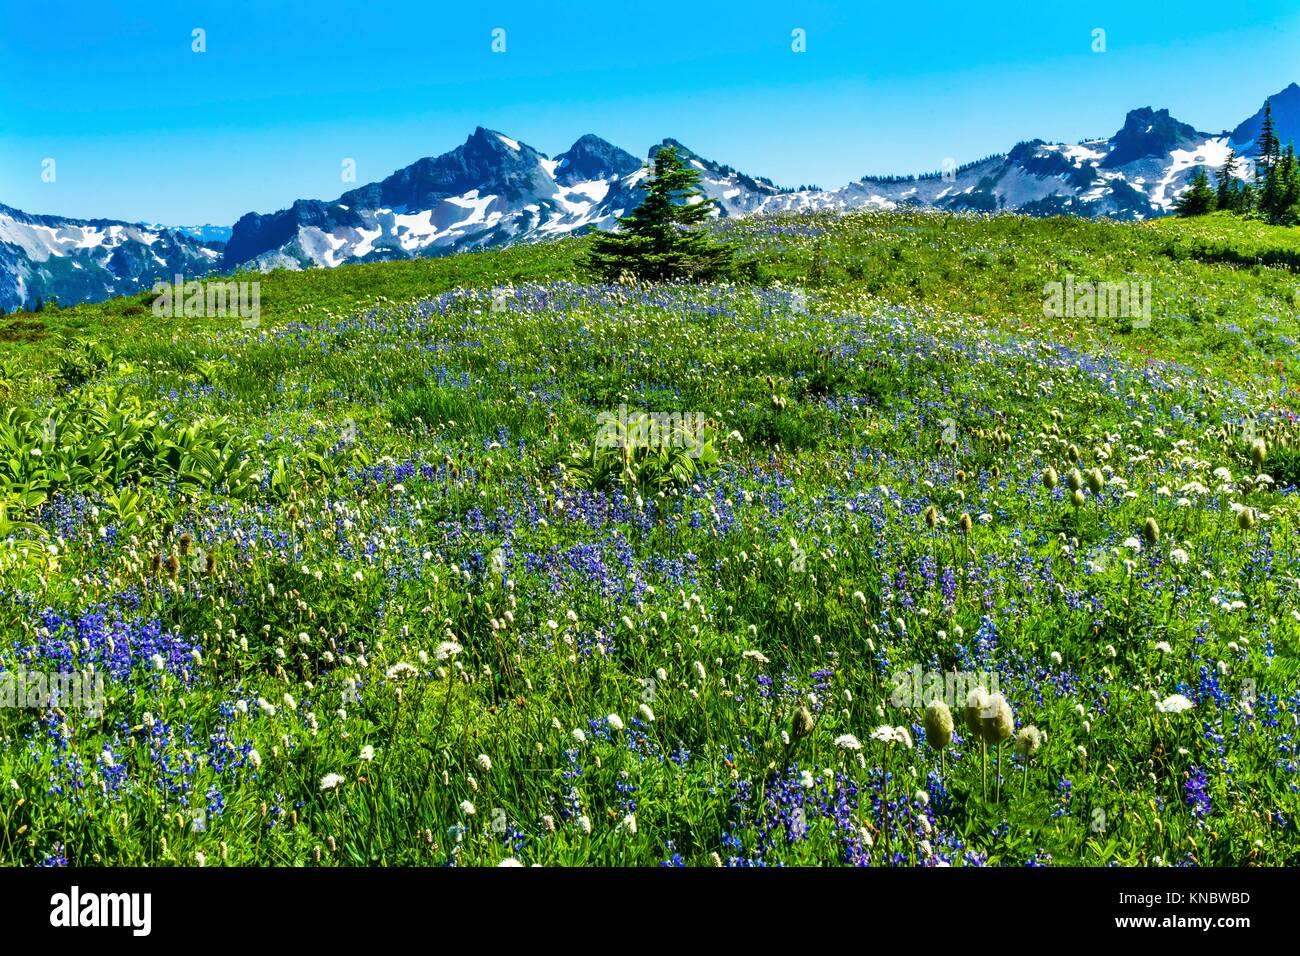 American Bistort Lupine Wildflowers Tatoosh Range Snow Mountains Paradise Mount Rainier National Park Washington Snow Mountain. Stock Photo